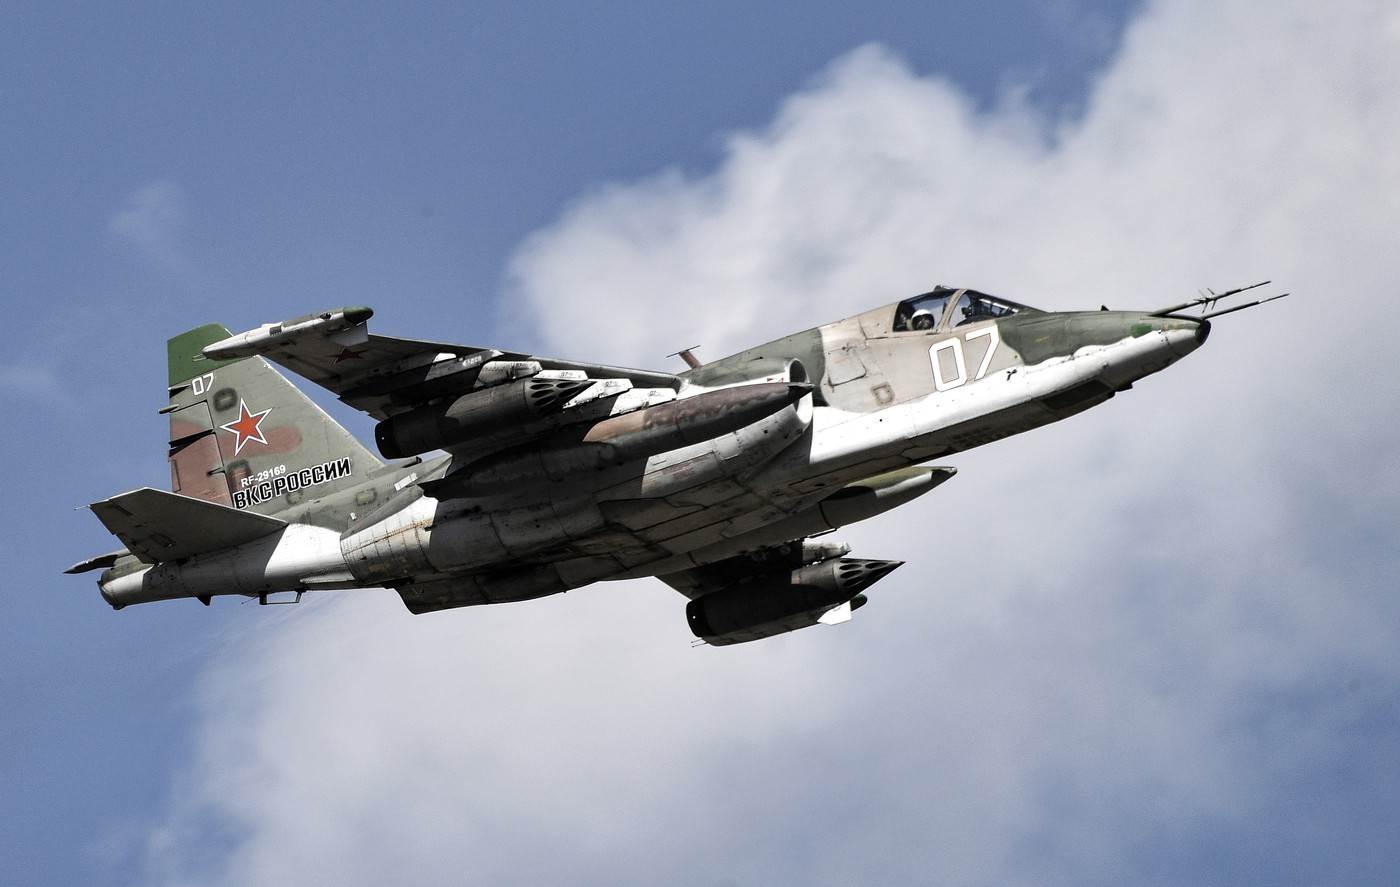  Ukrajinska vojska je danas oborila ruski vojni avion  